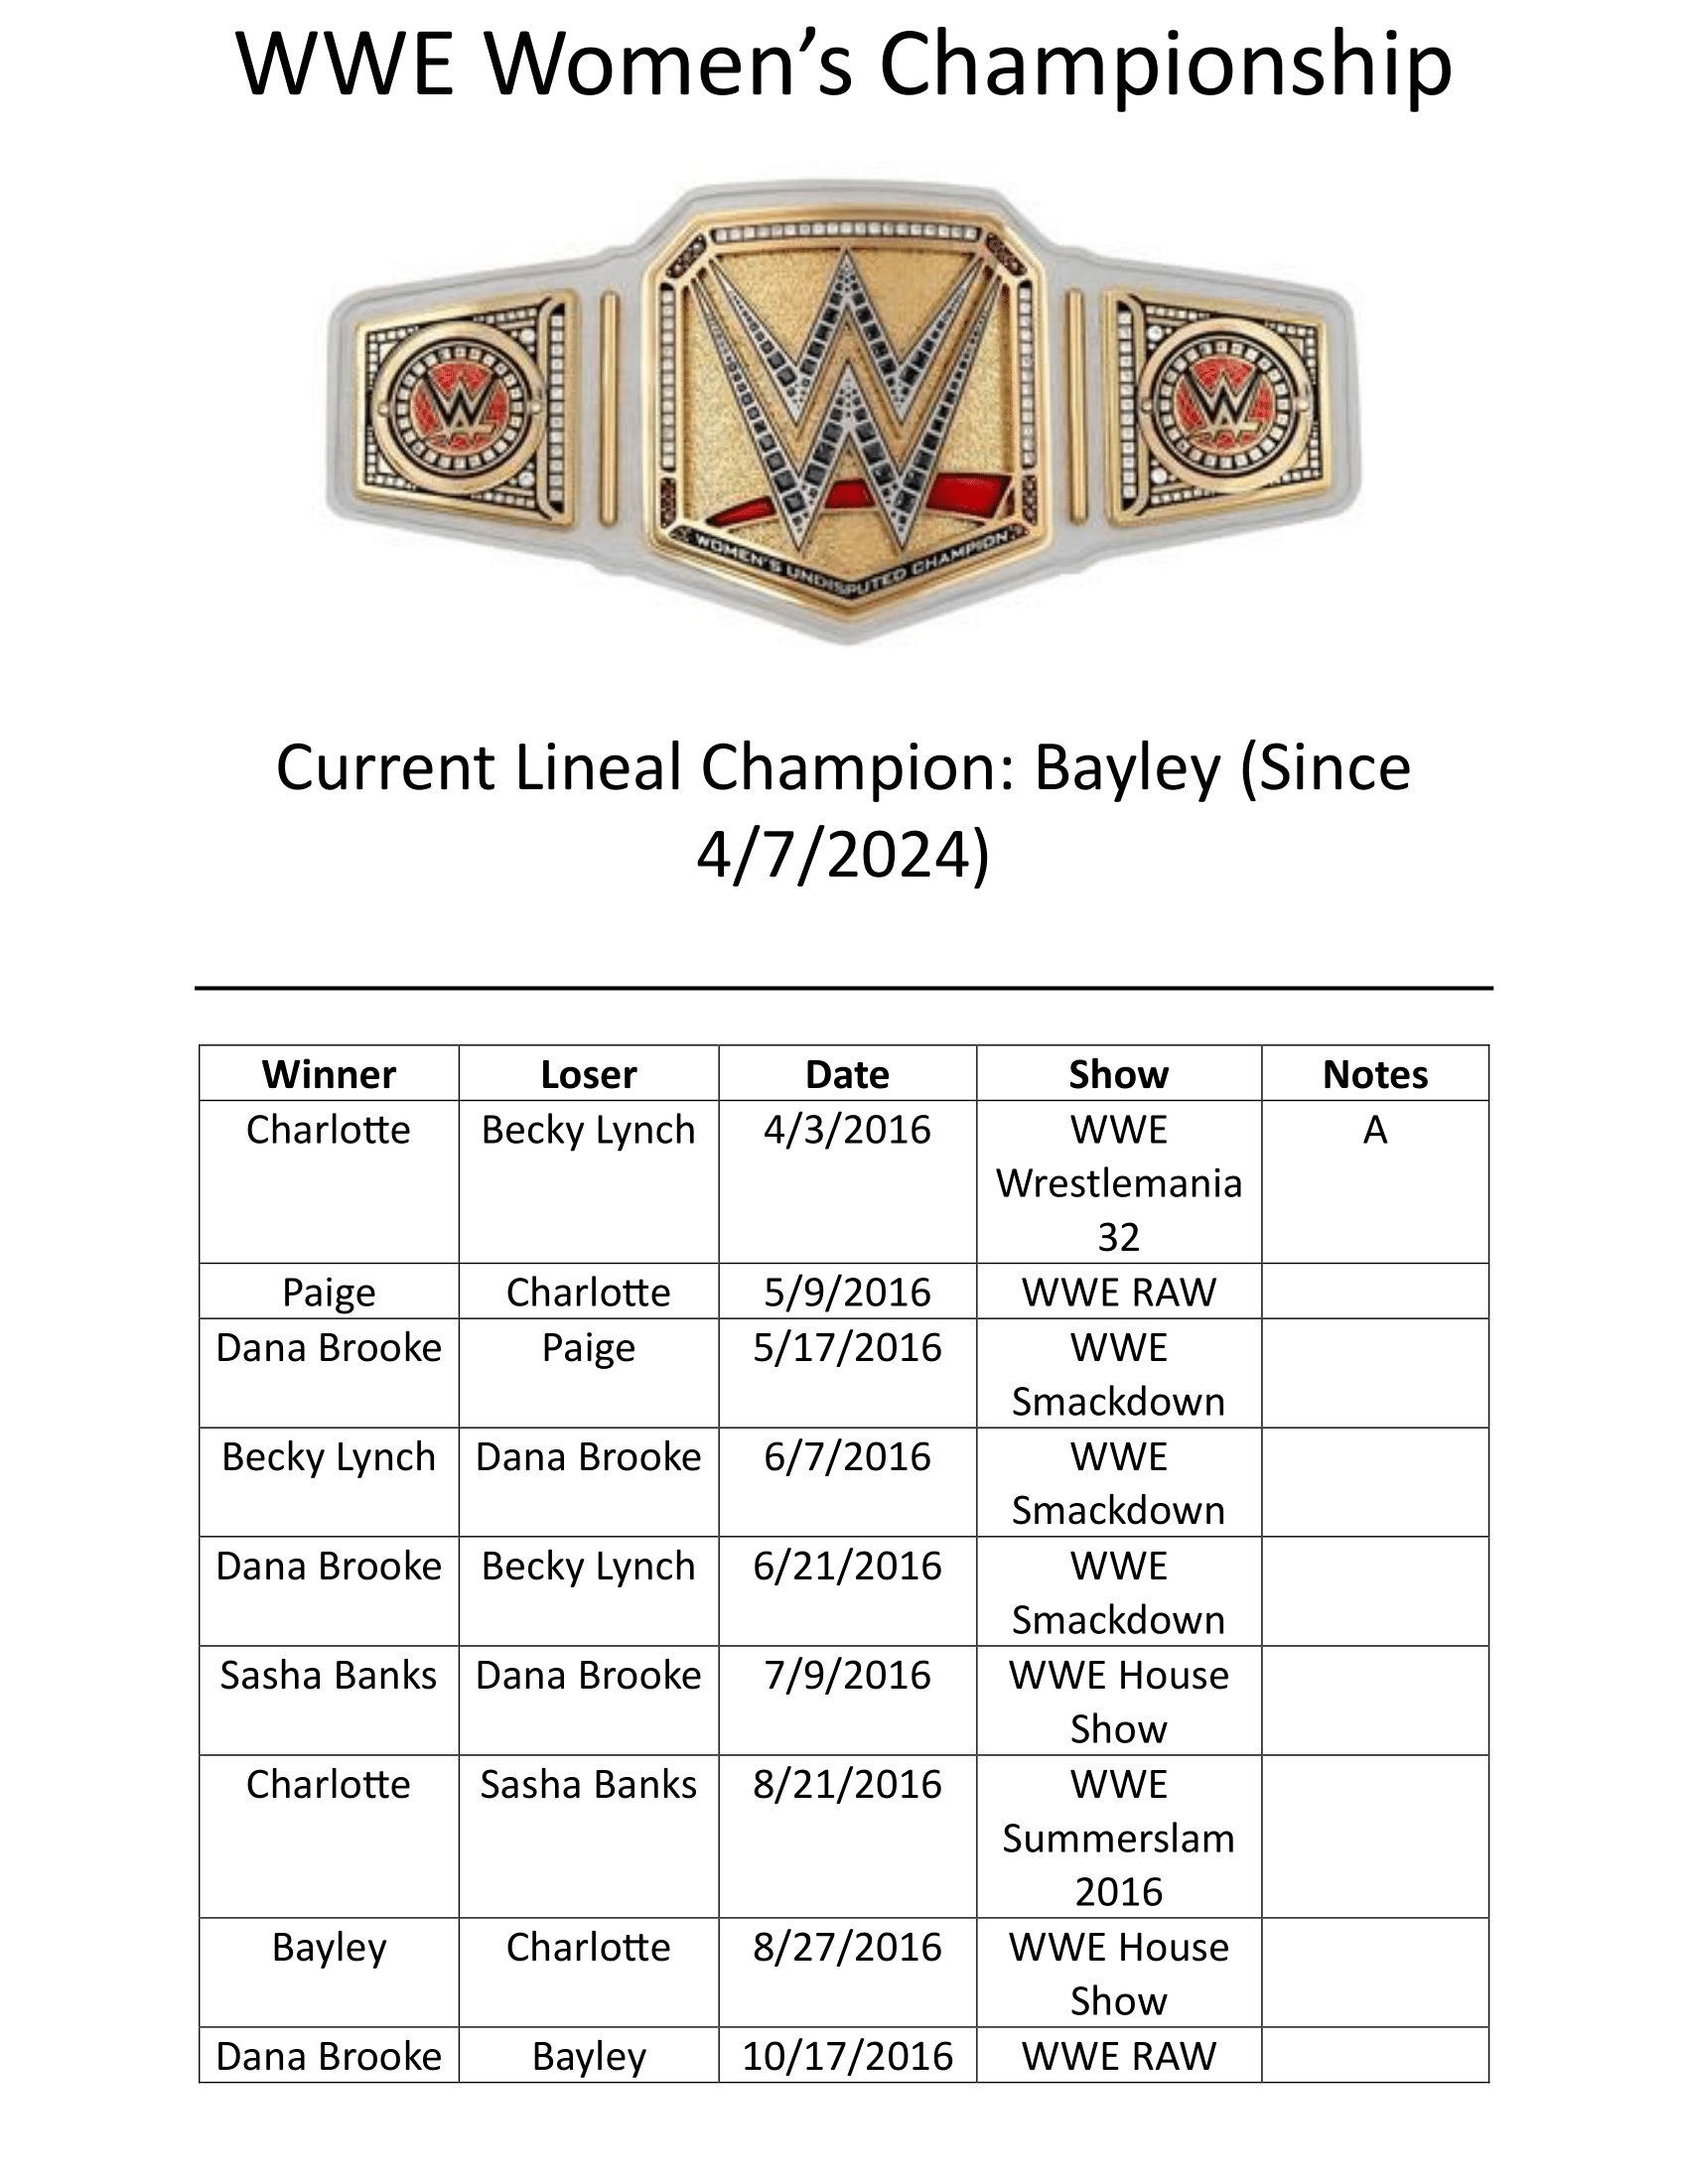 WWE-Womens-Championship-1.png